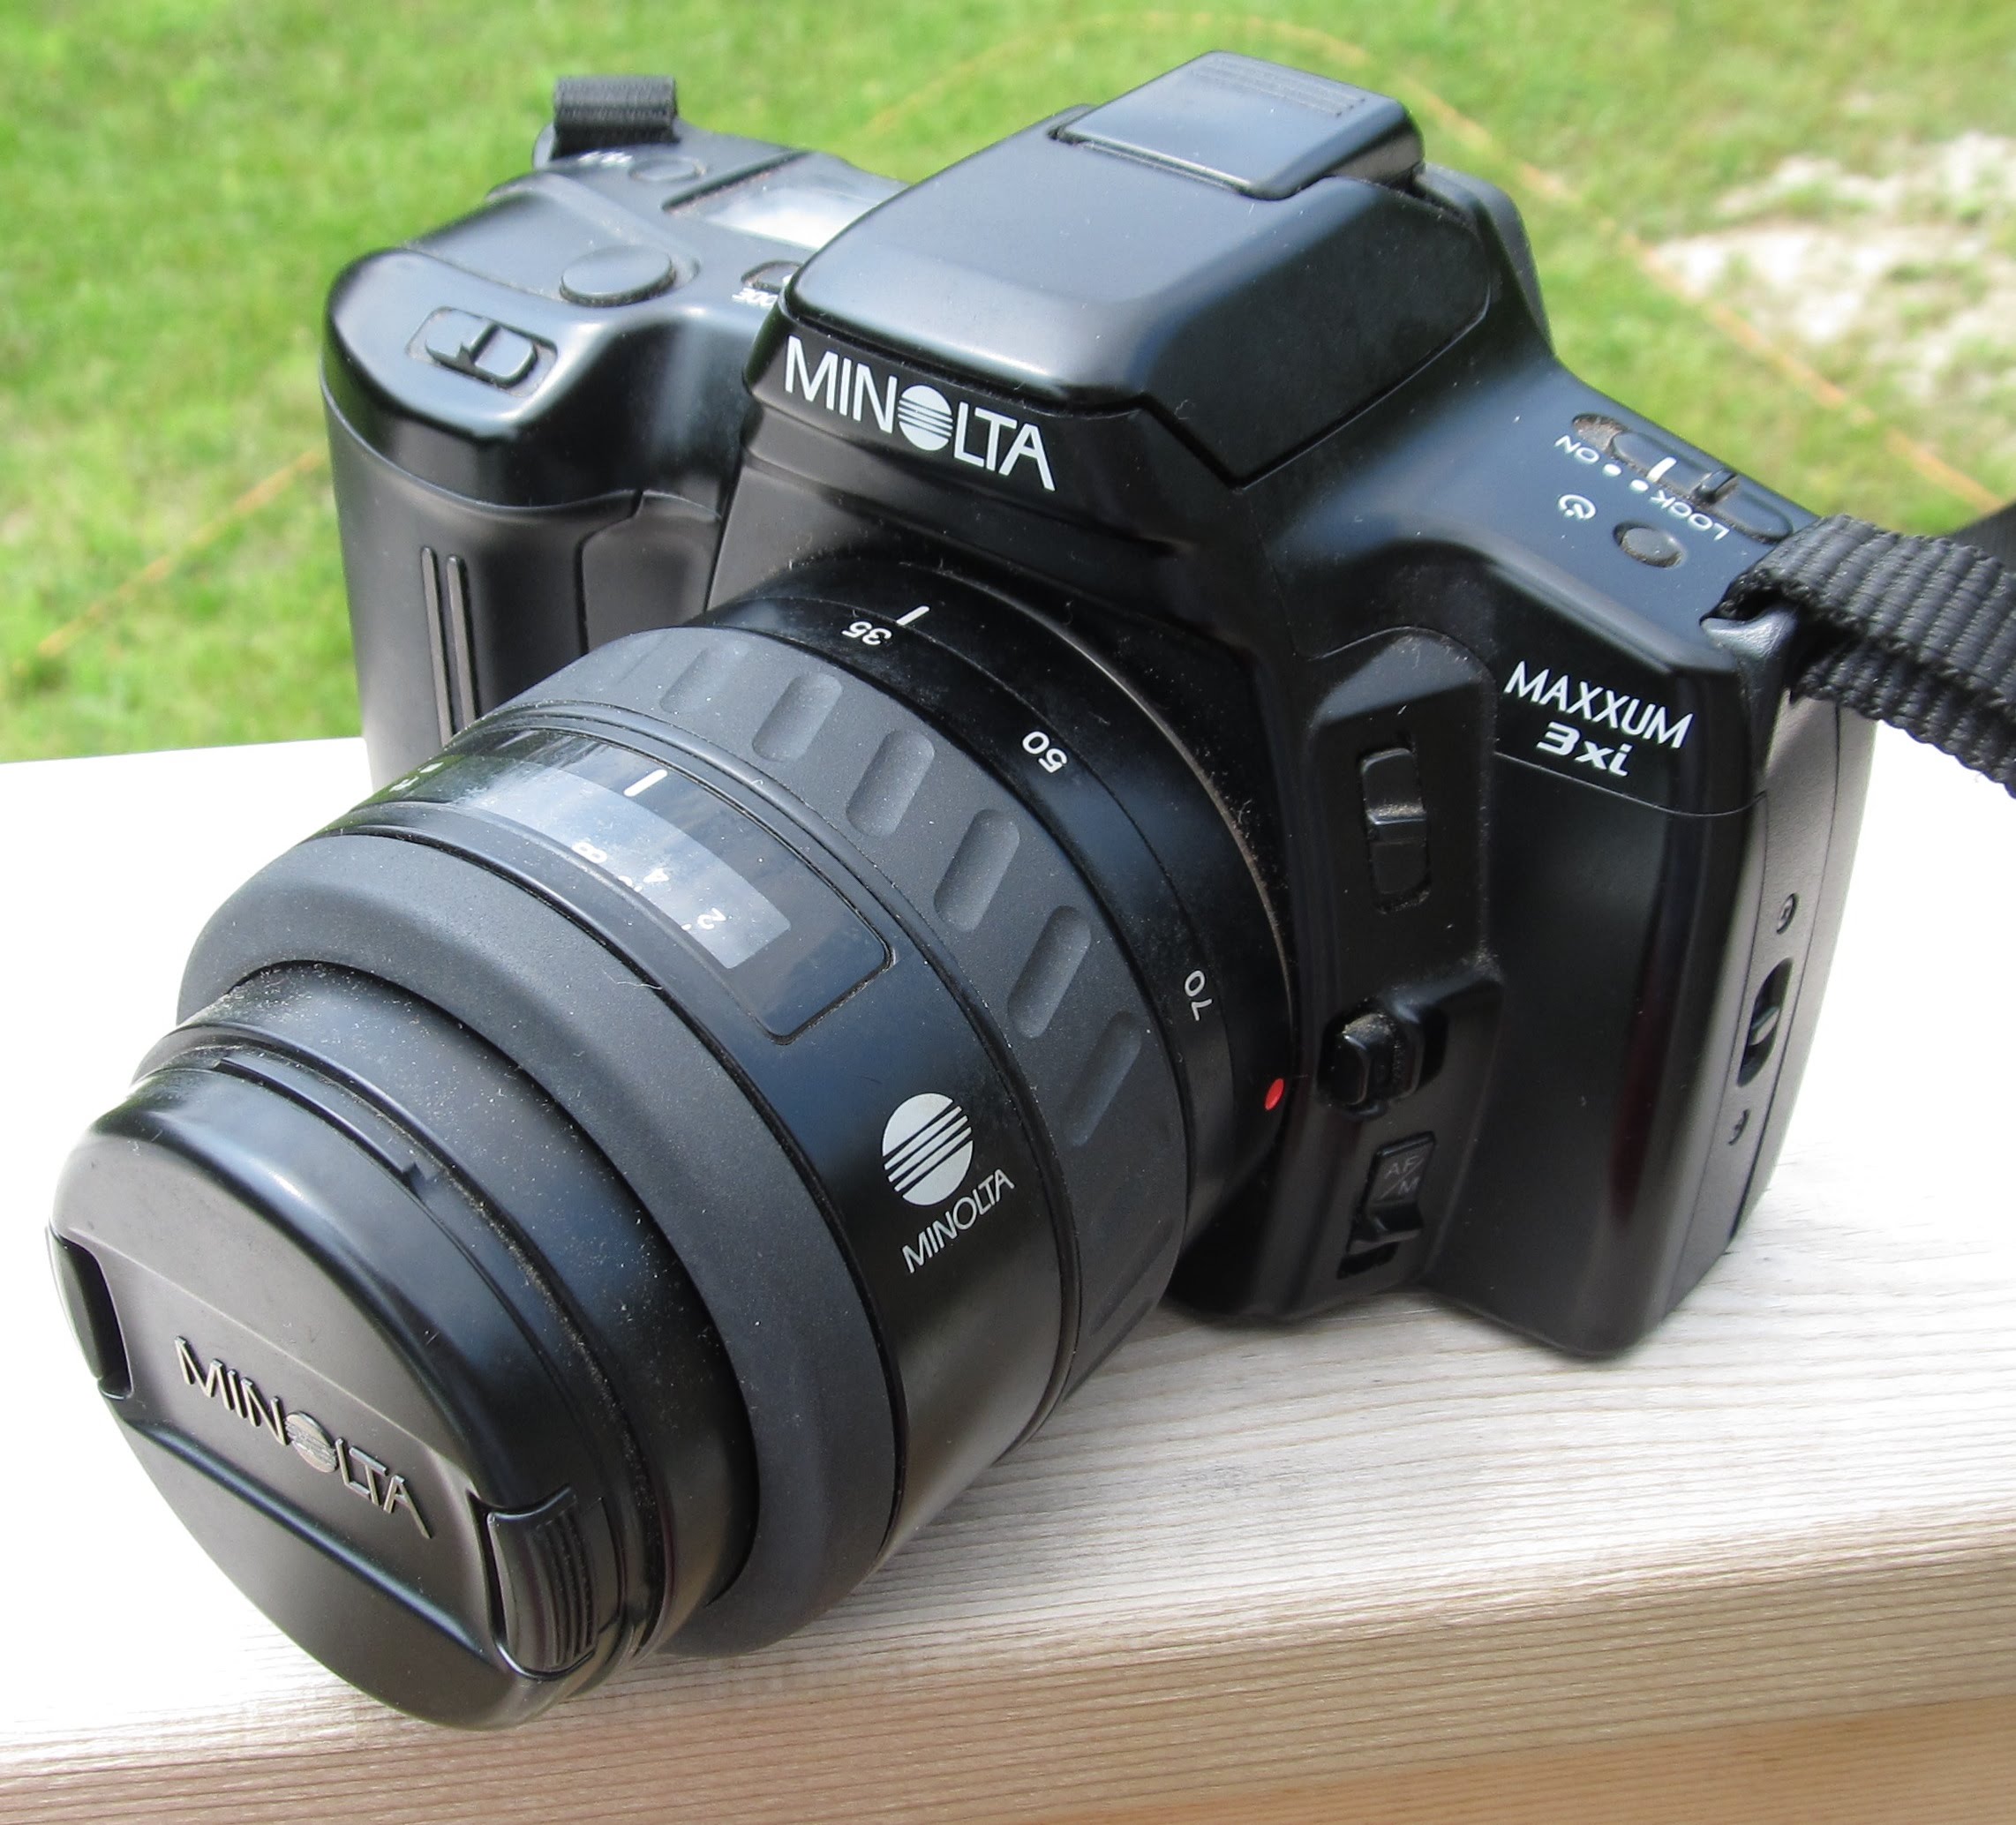 Minolta Maxxum 3xi 35mm SLR camera (1994) + test photos - YouTube